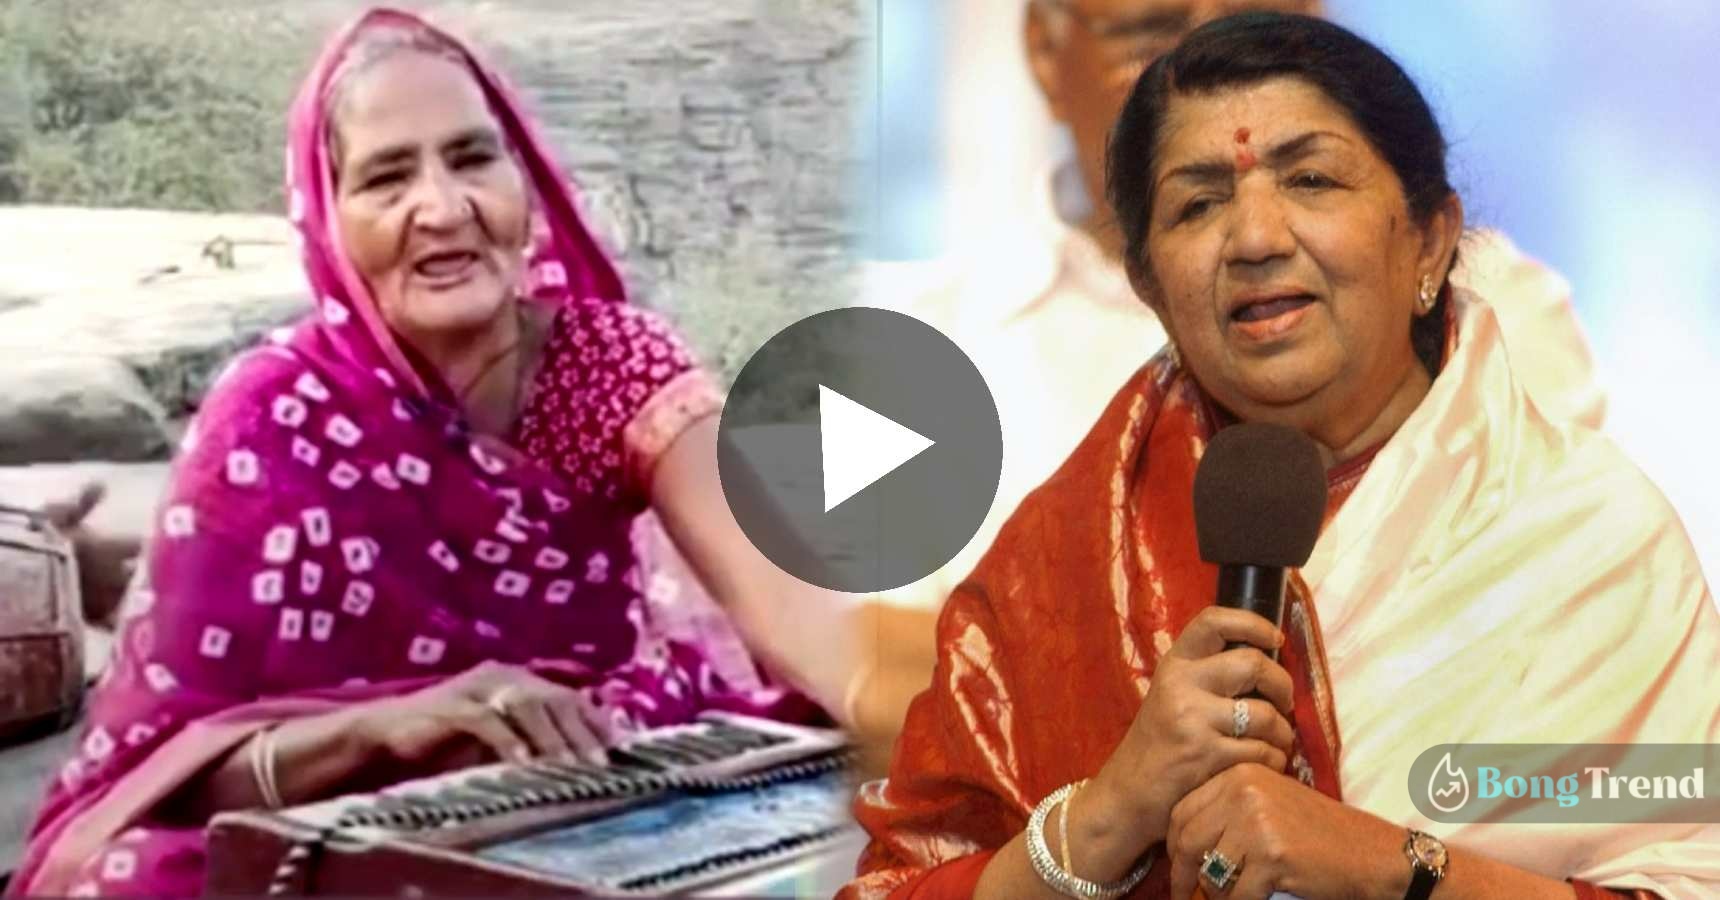 Old Woman singing Lata Mangeshkar song Milo na tumko ham ghabraya viral video